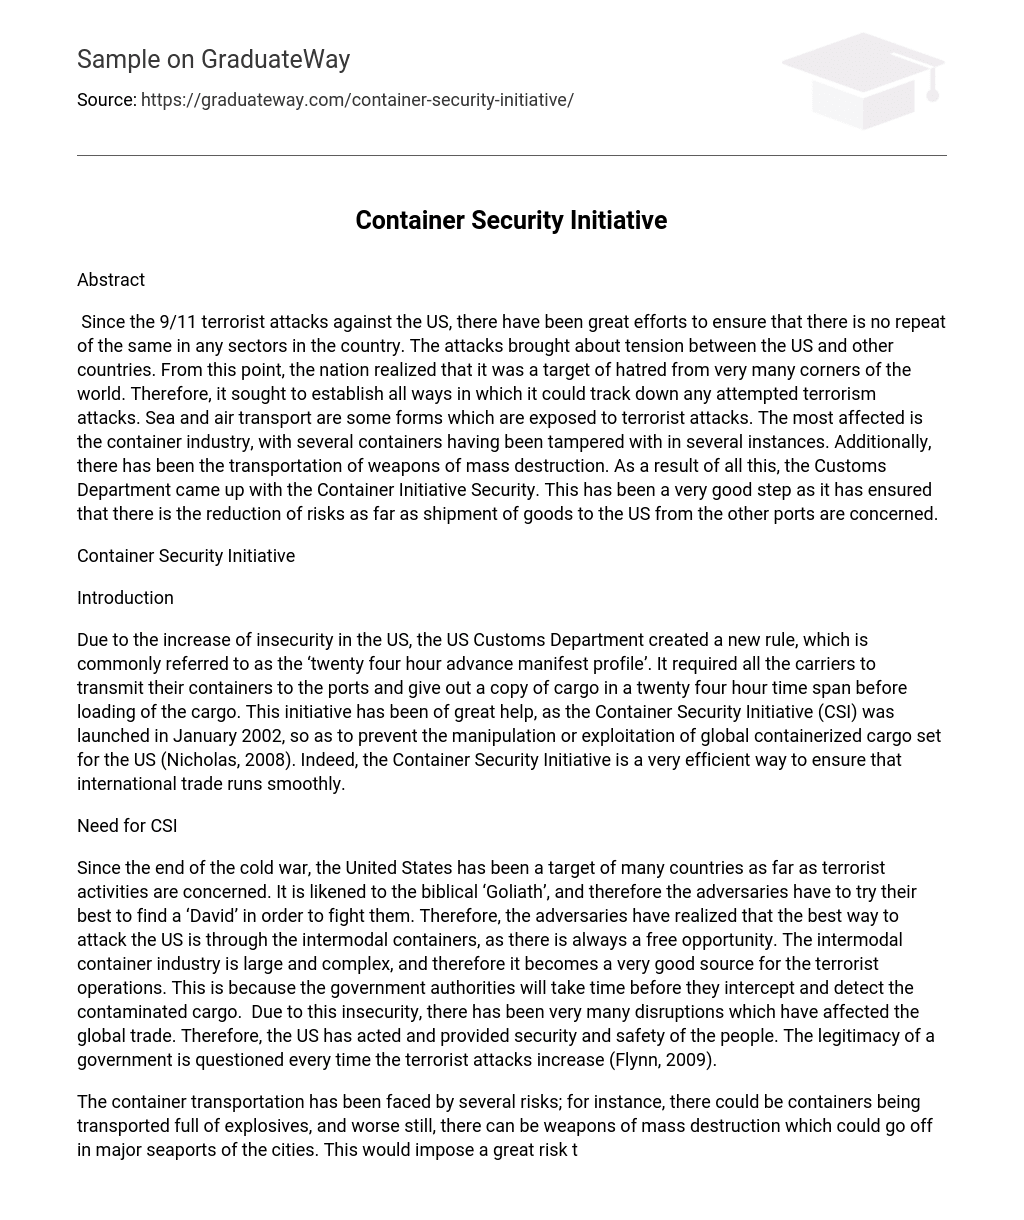 Container Security Initiative